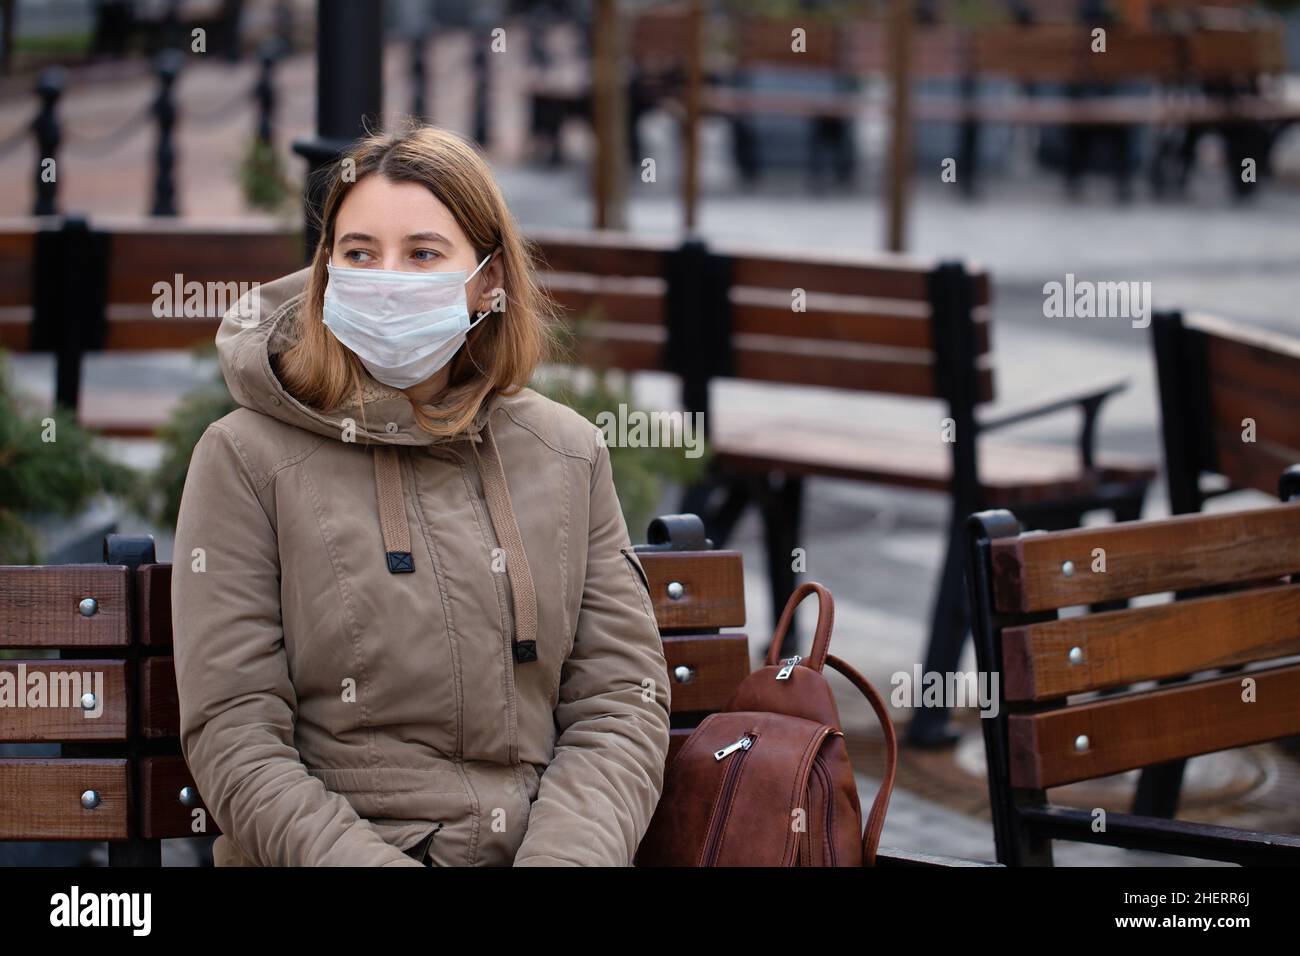 Young woman wearing face mask during flu virus outbreak. Coronavirus epidemic lockdown. Stock Photo